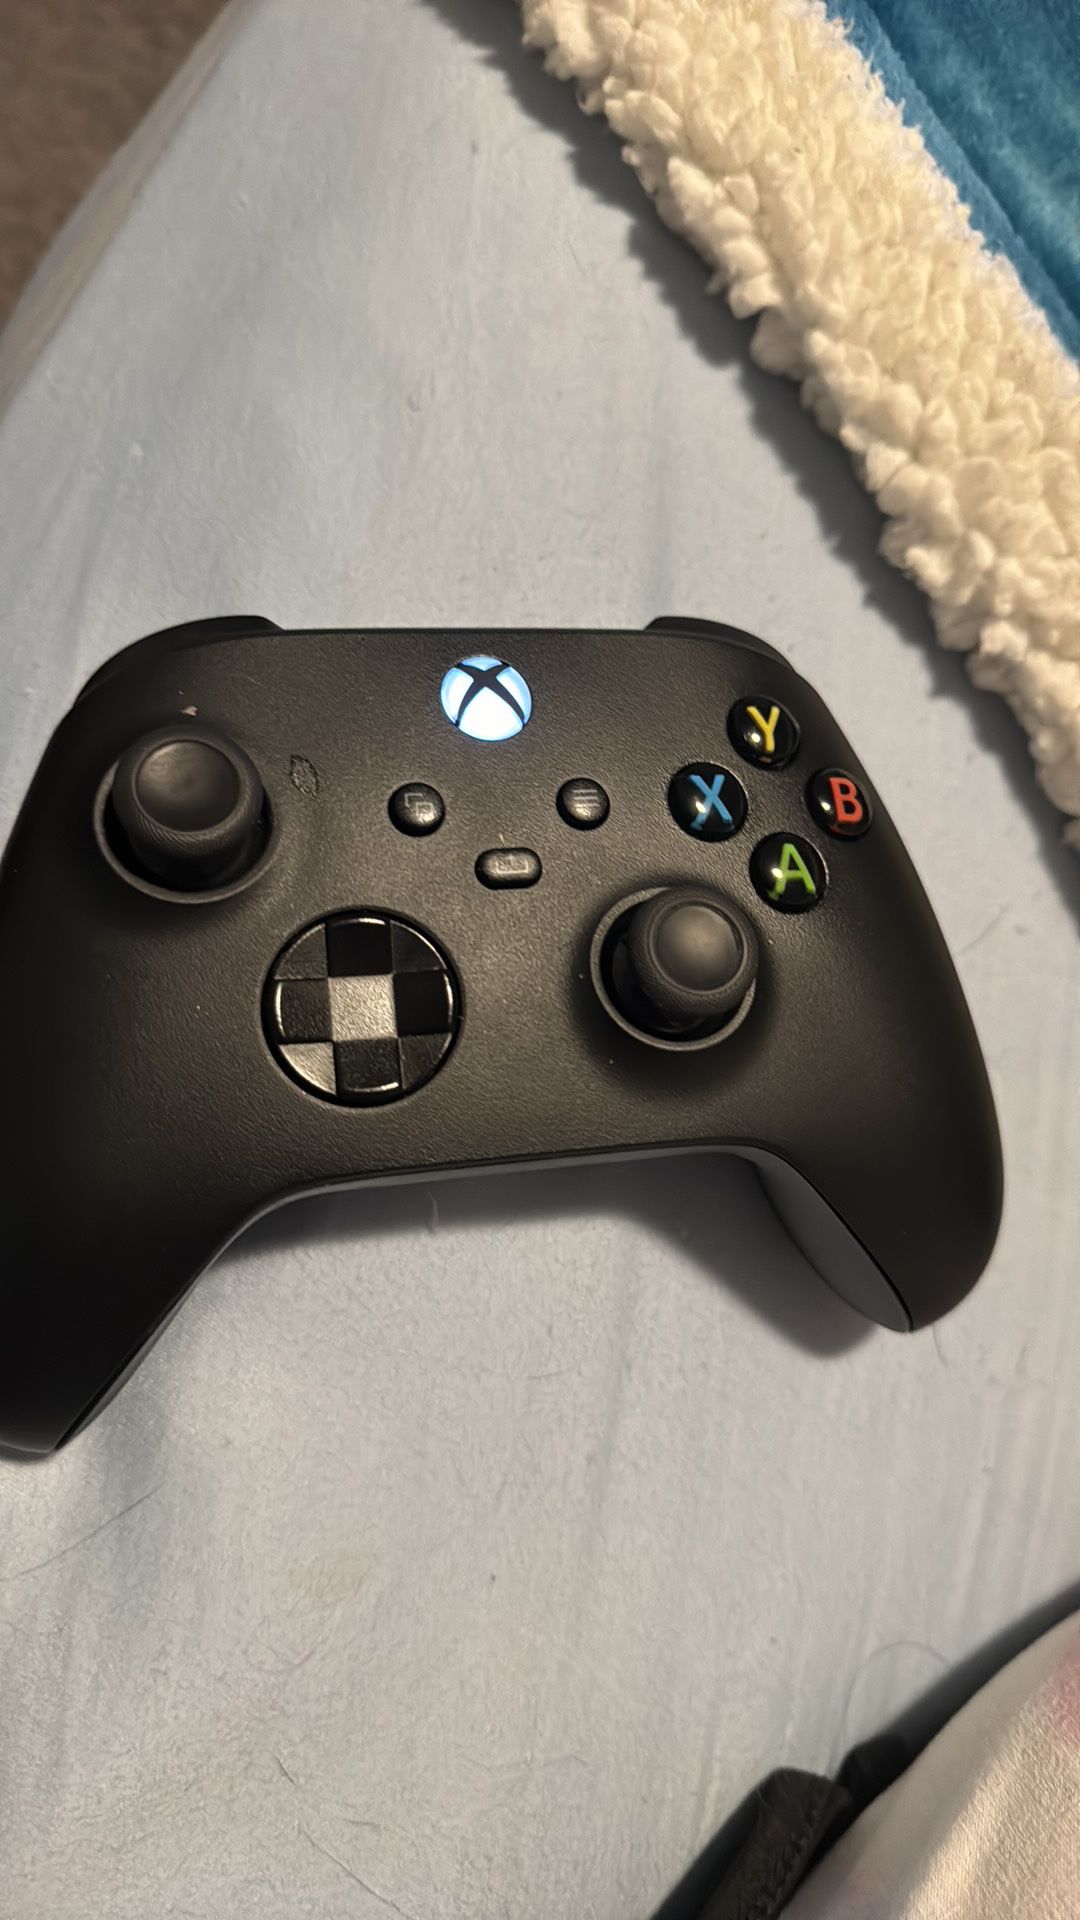 Xbox One X Black Controller 